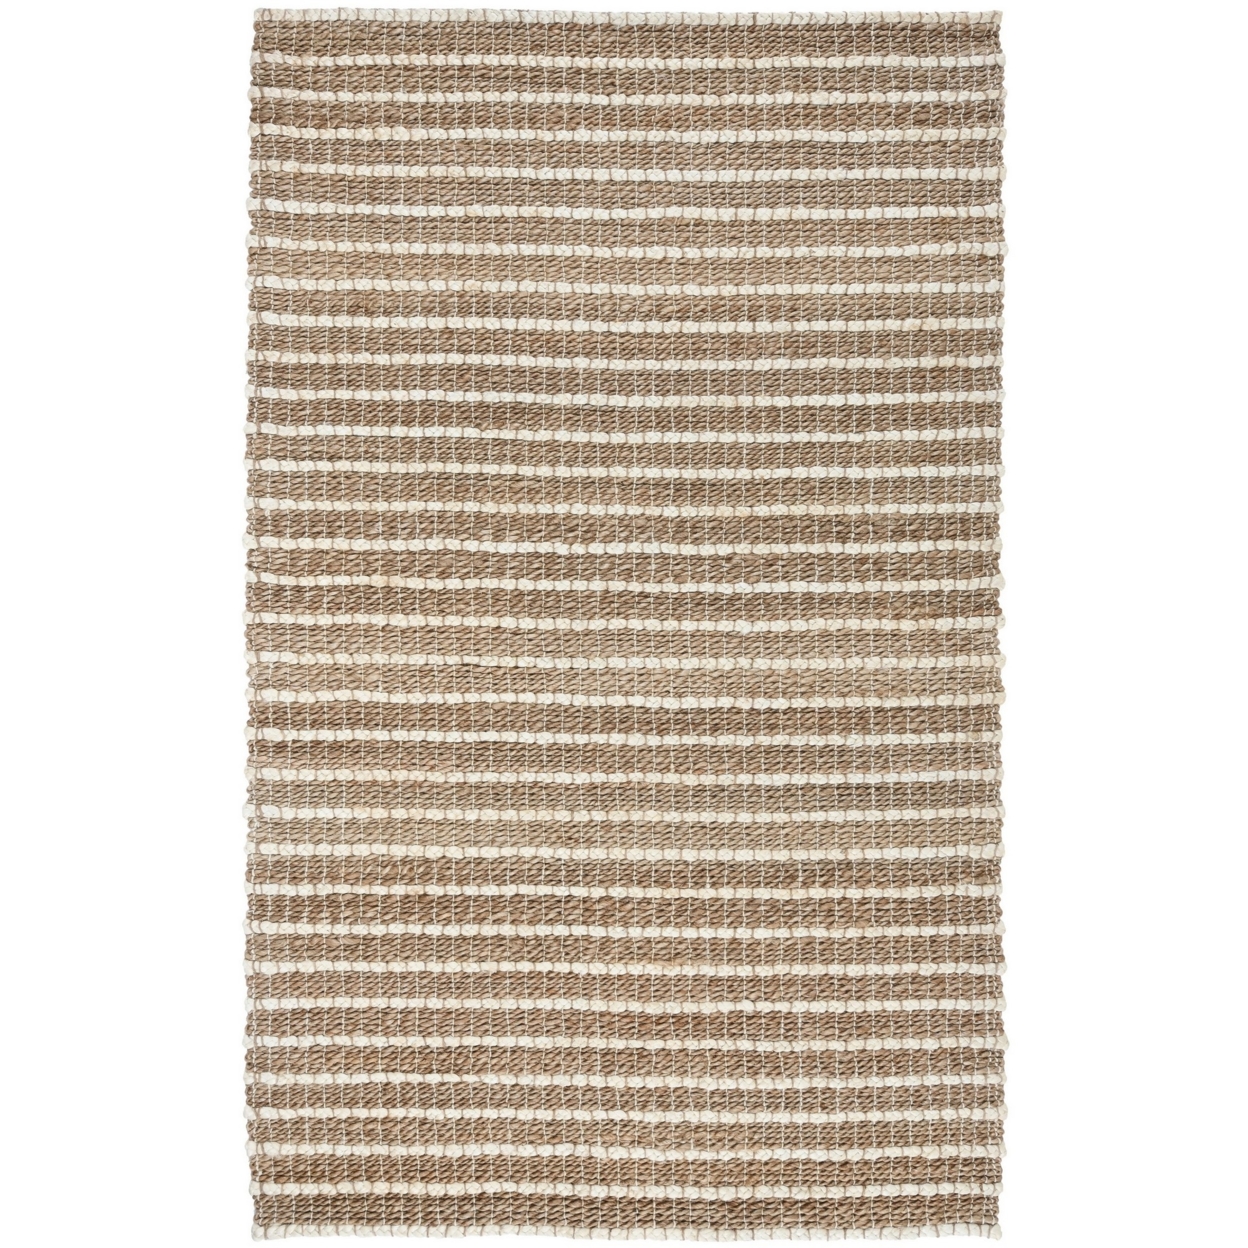 Josie 8 X 10 Area Rug, Handwoven Jute, Braided And Coiled White Stripes - Saltoro Sherpi